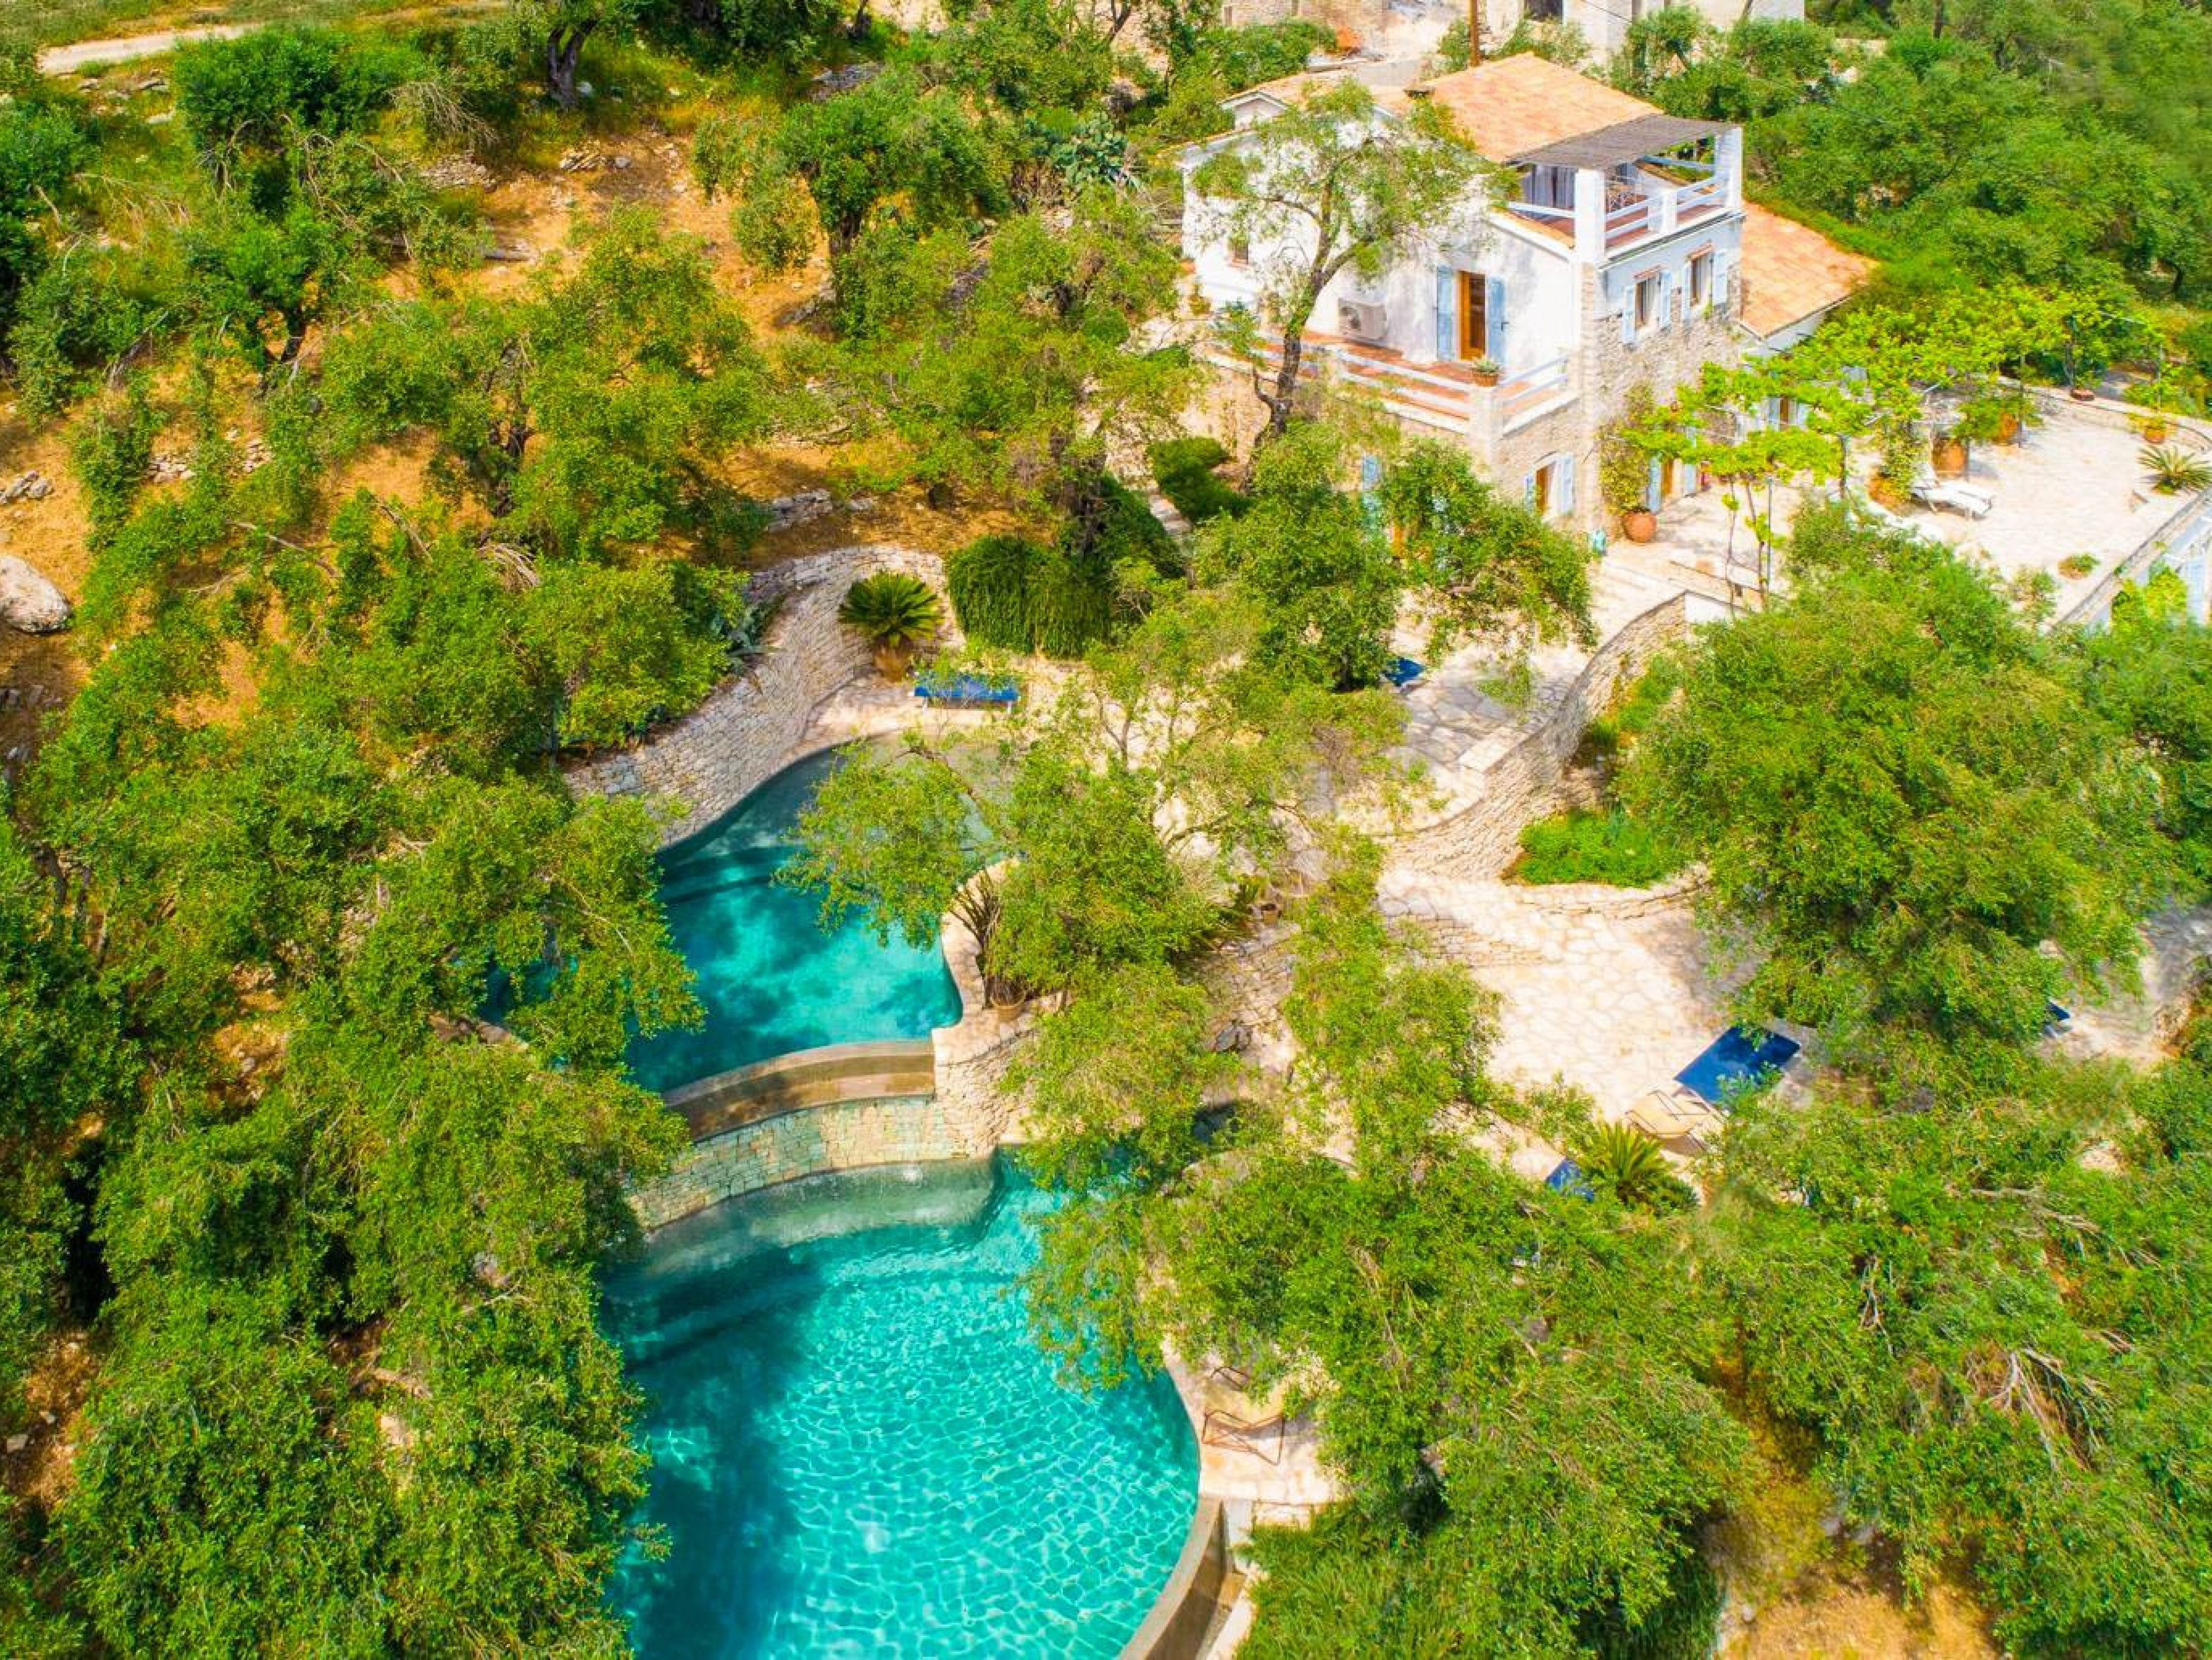 The Olive Press - Agni Bay - villas with private waterfalls